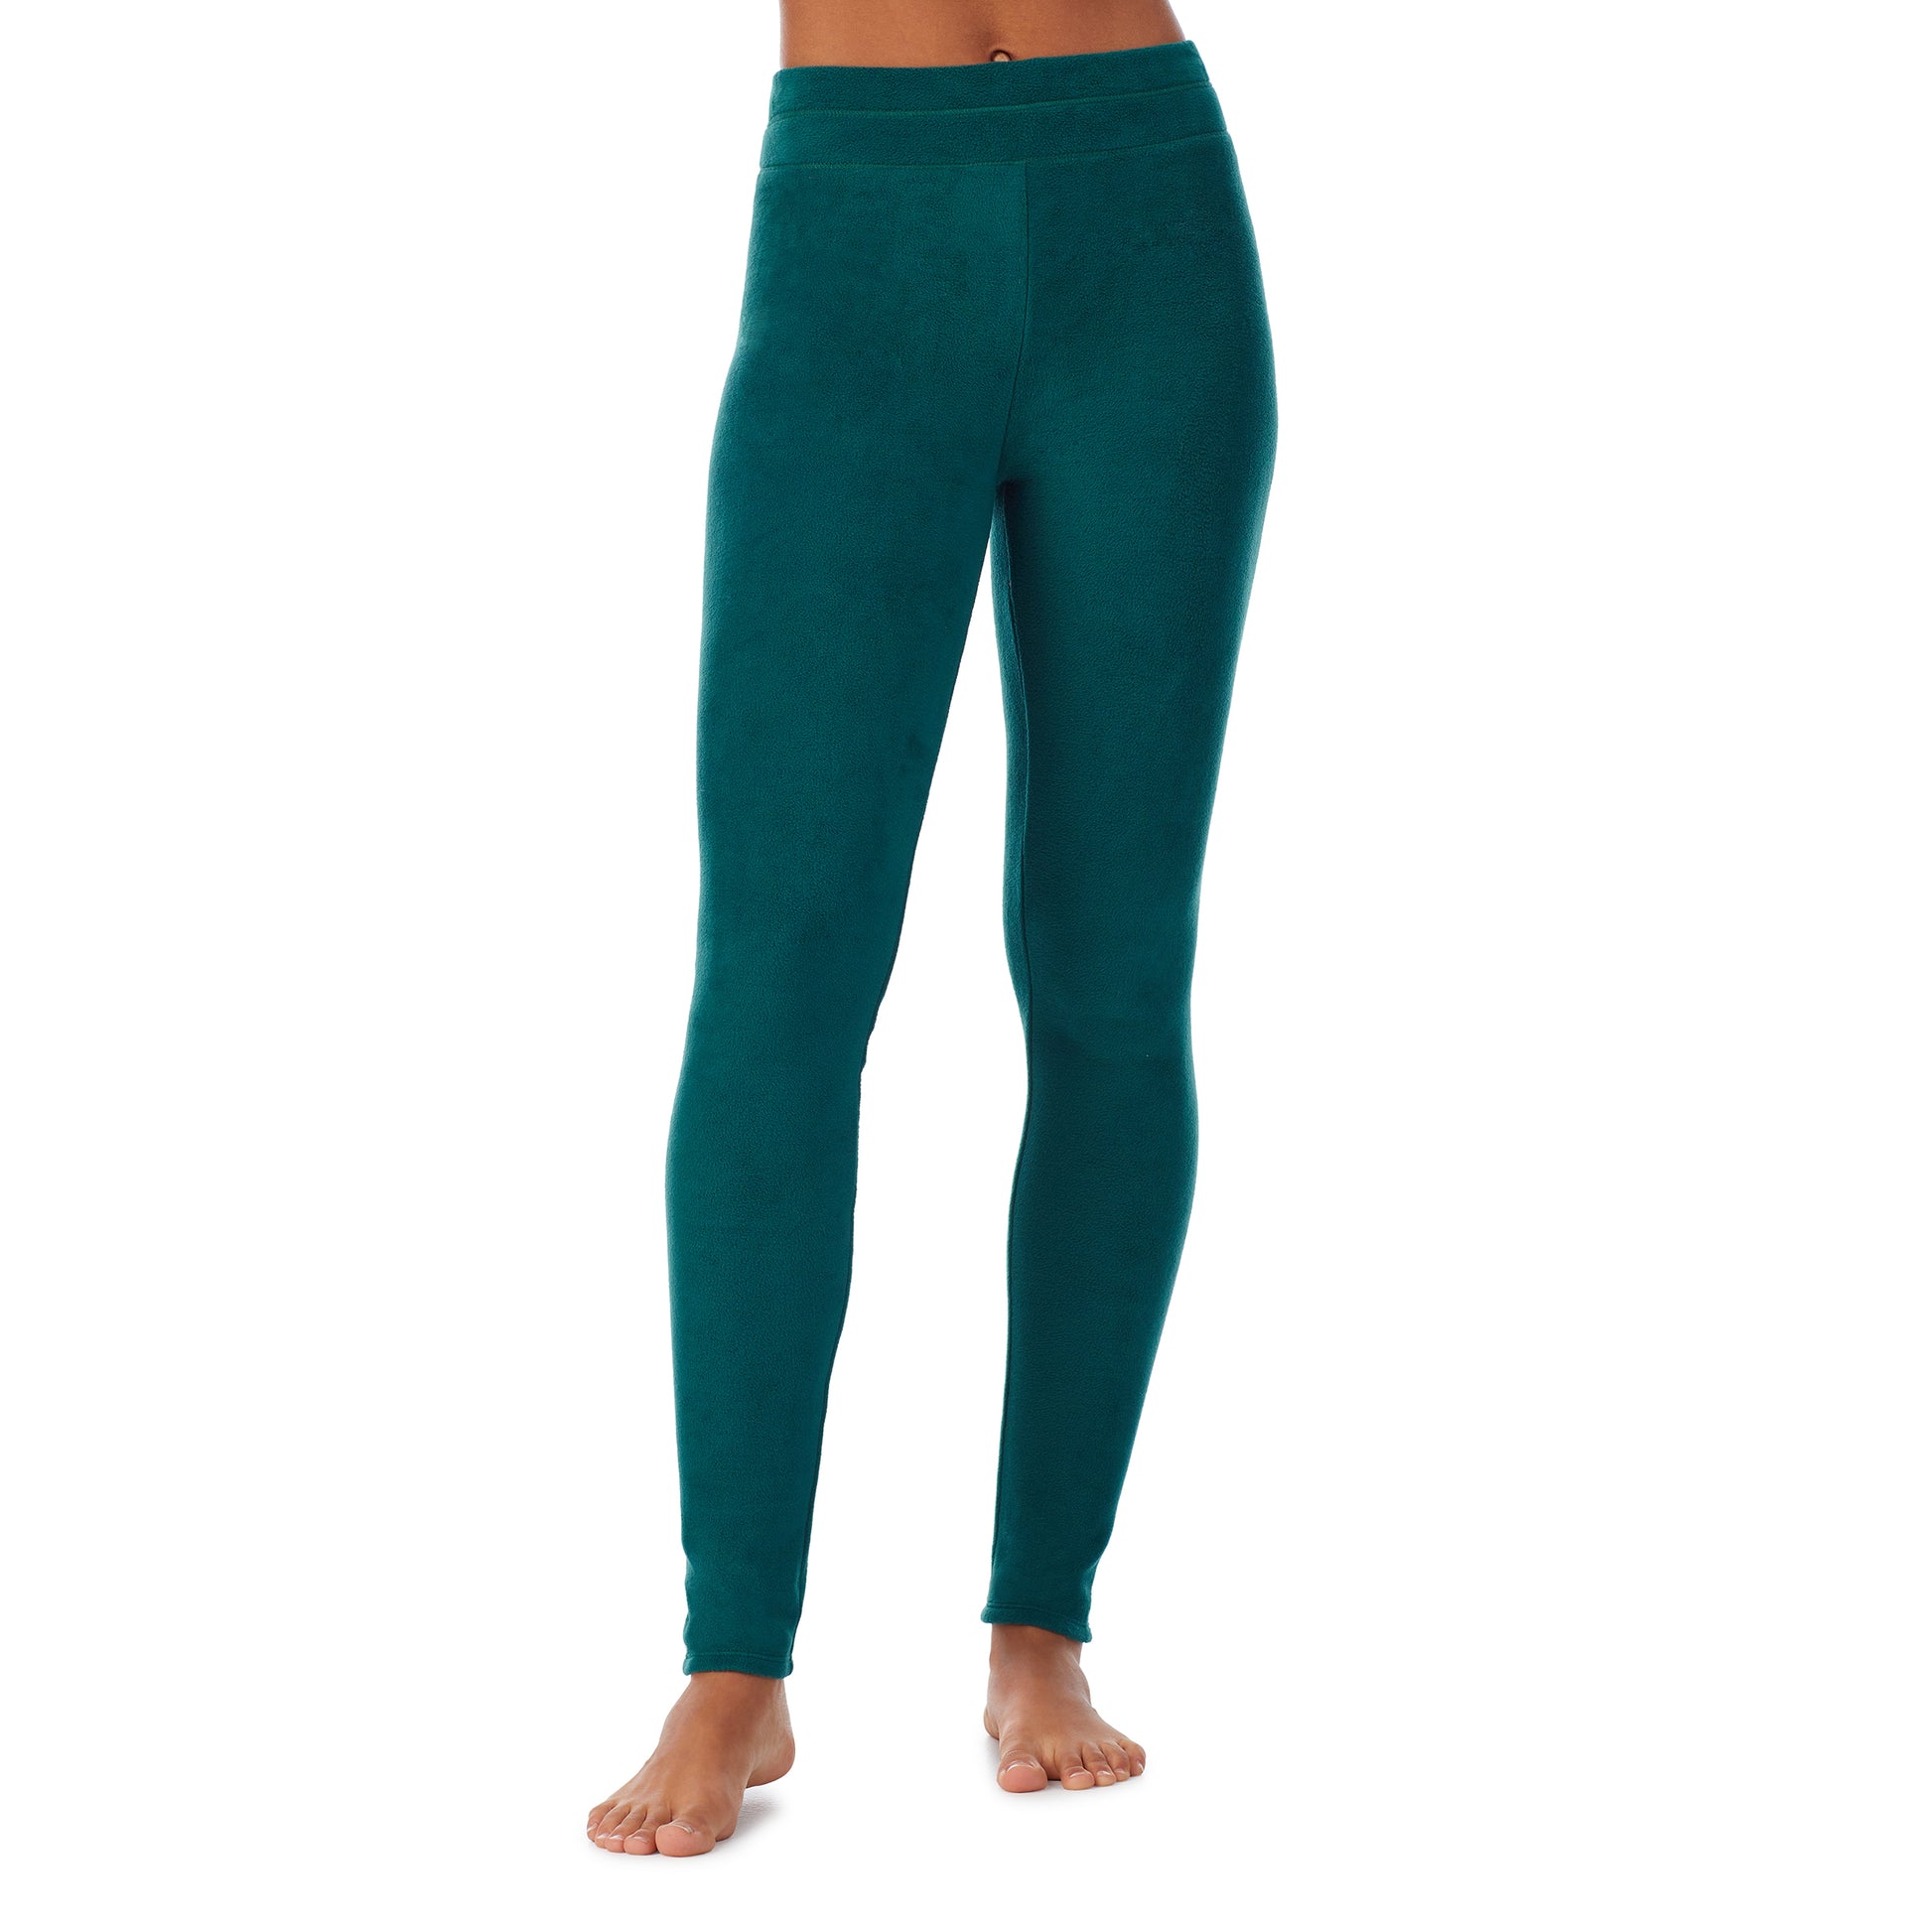 Viridian Green; Model is wearing size S. She is 5’9”, Bust 32”, Waist 25.5”, Hips 36”.@lower body of a lady wearing green legging